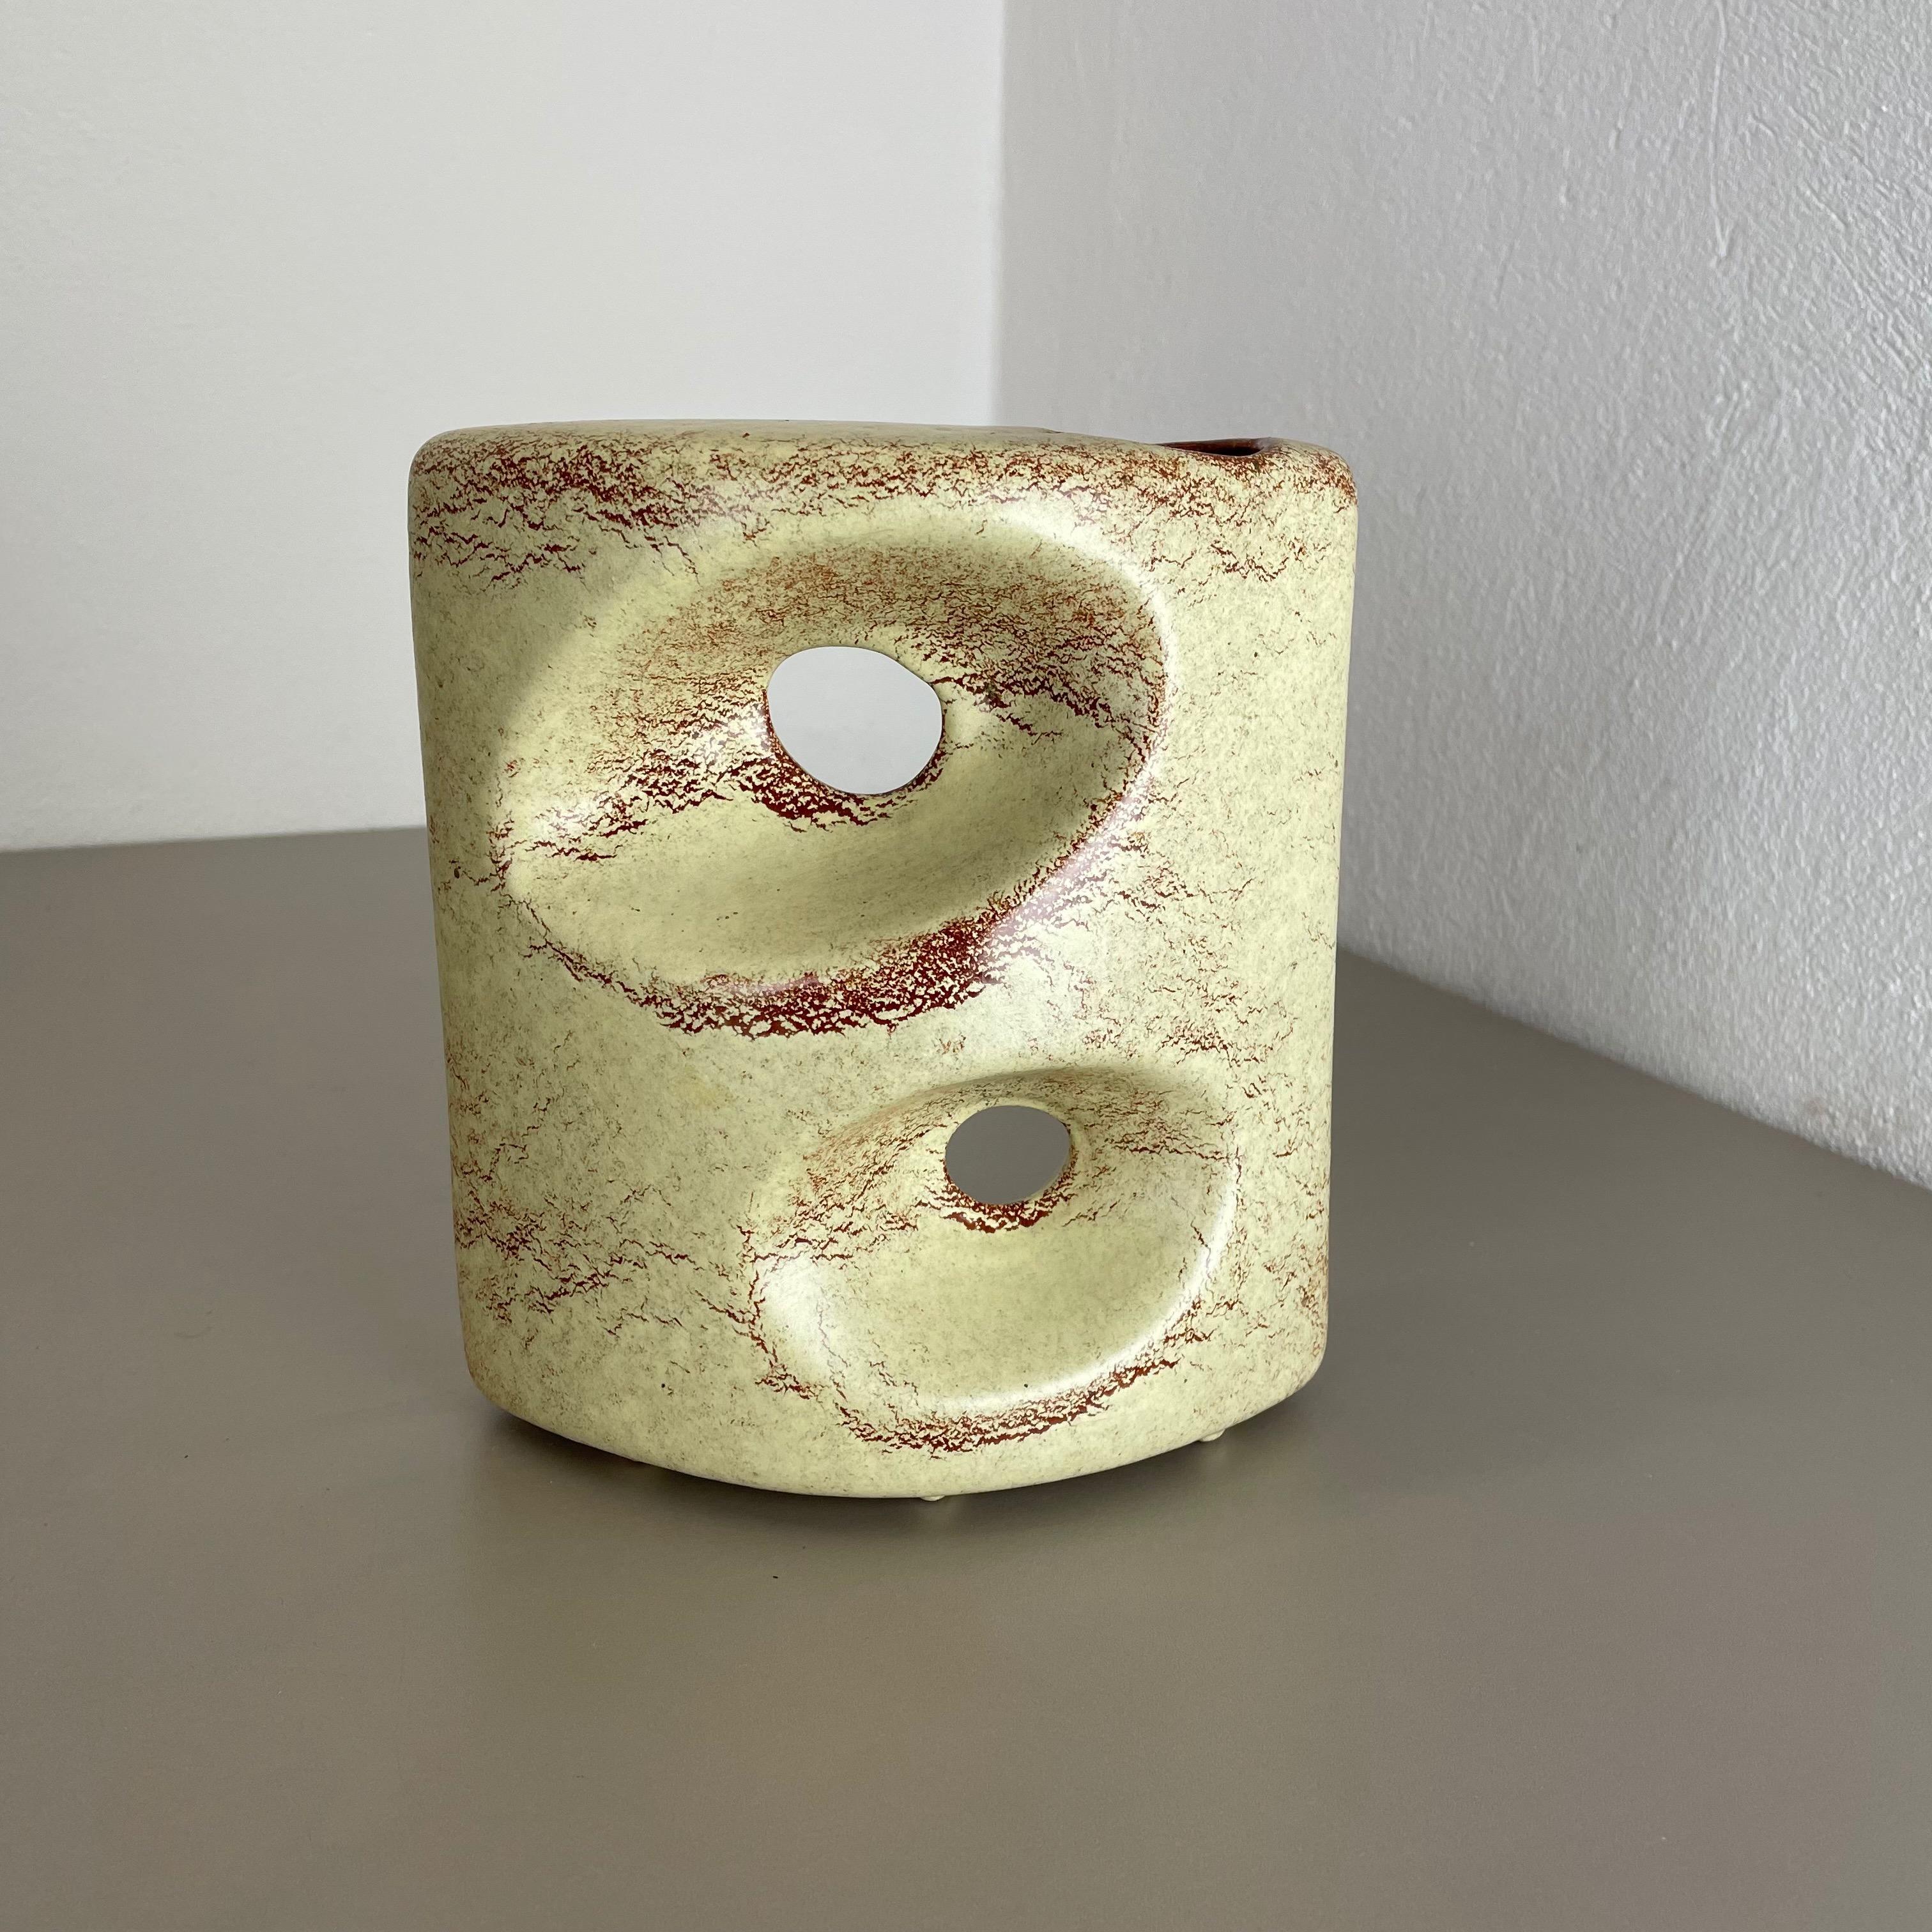 Unique Ceramic Studio Pottery Vase by Bertoncello Schiavon Ceramics, Italy 1970s For Sale 1